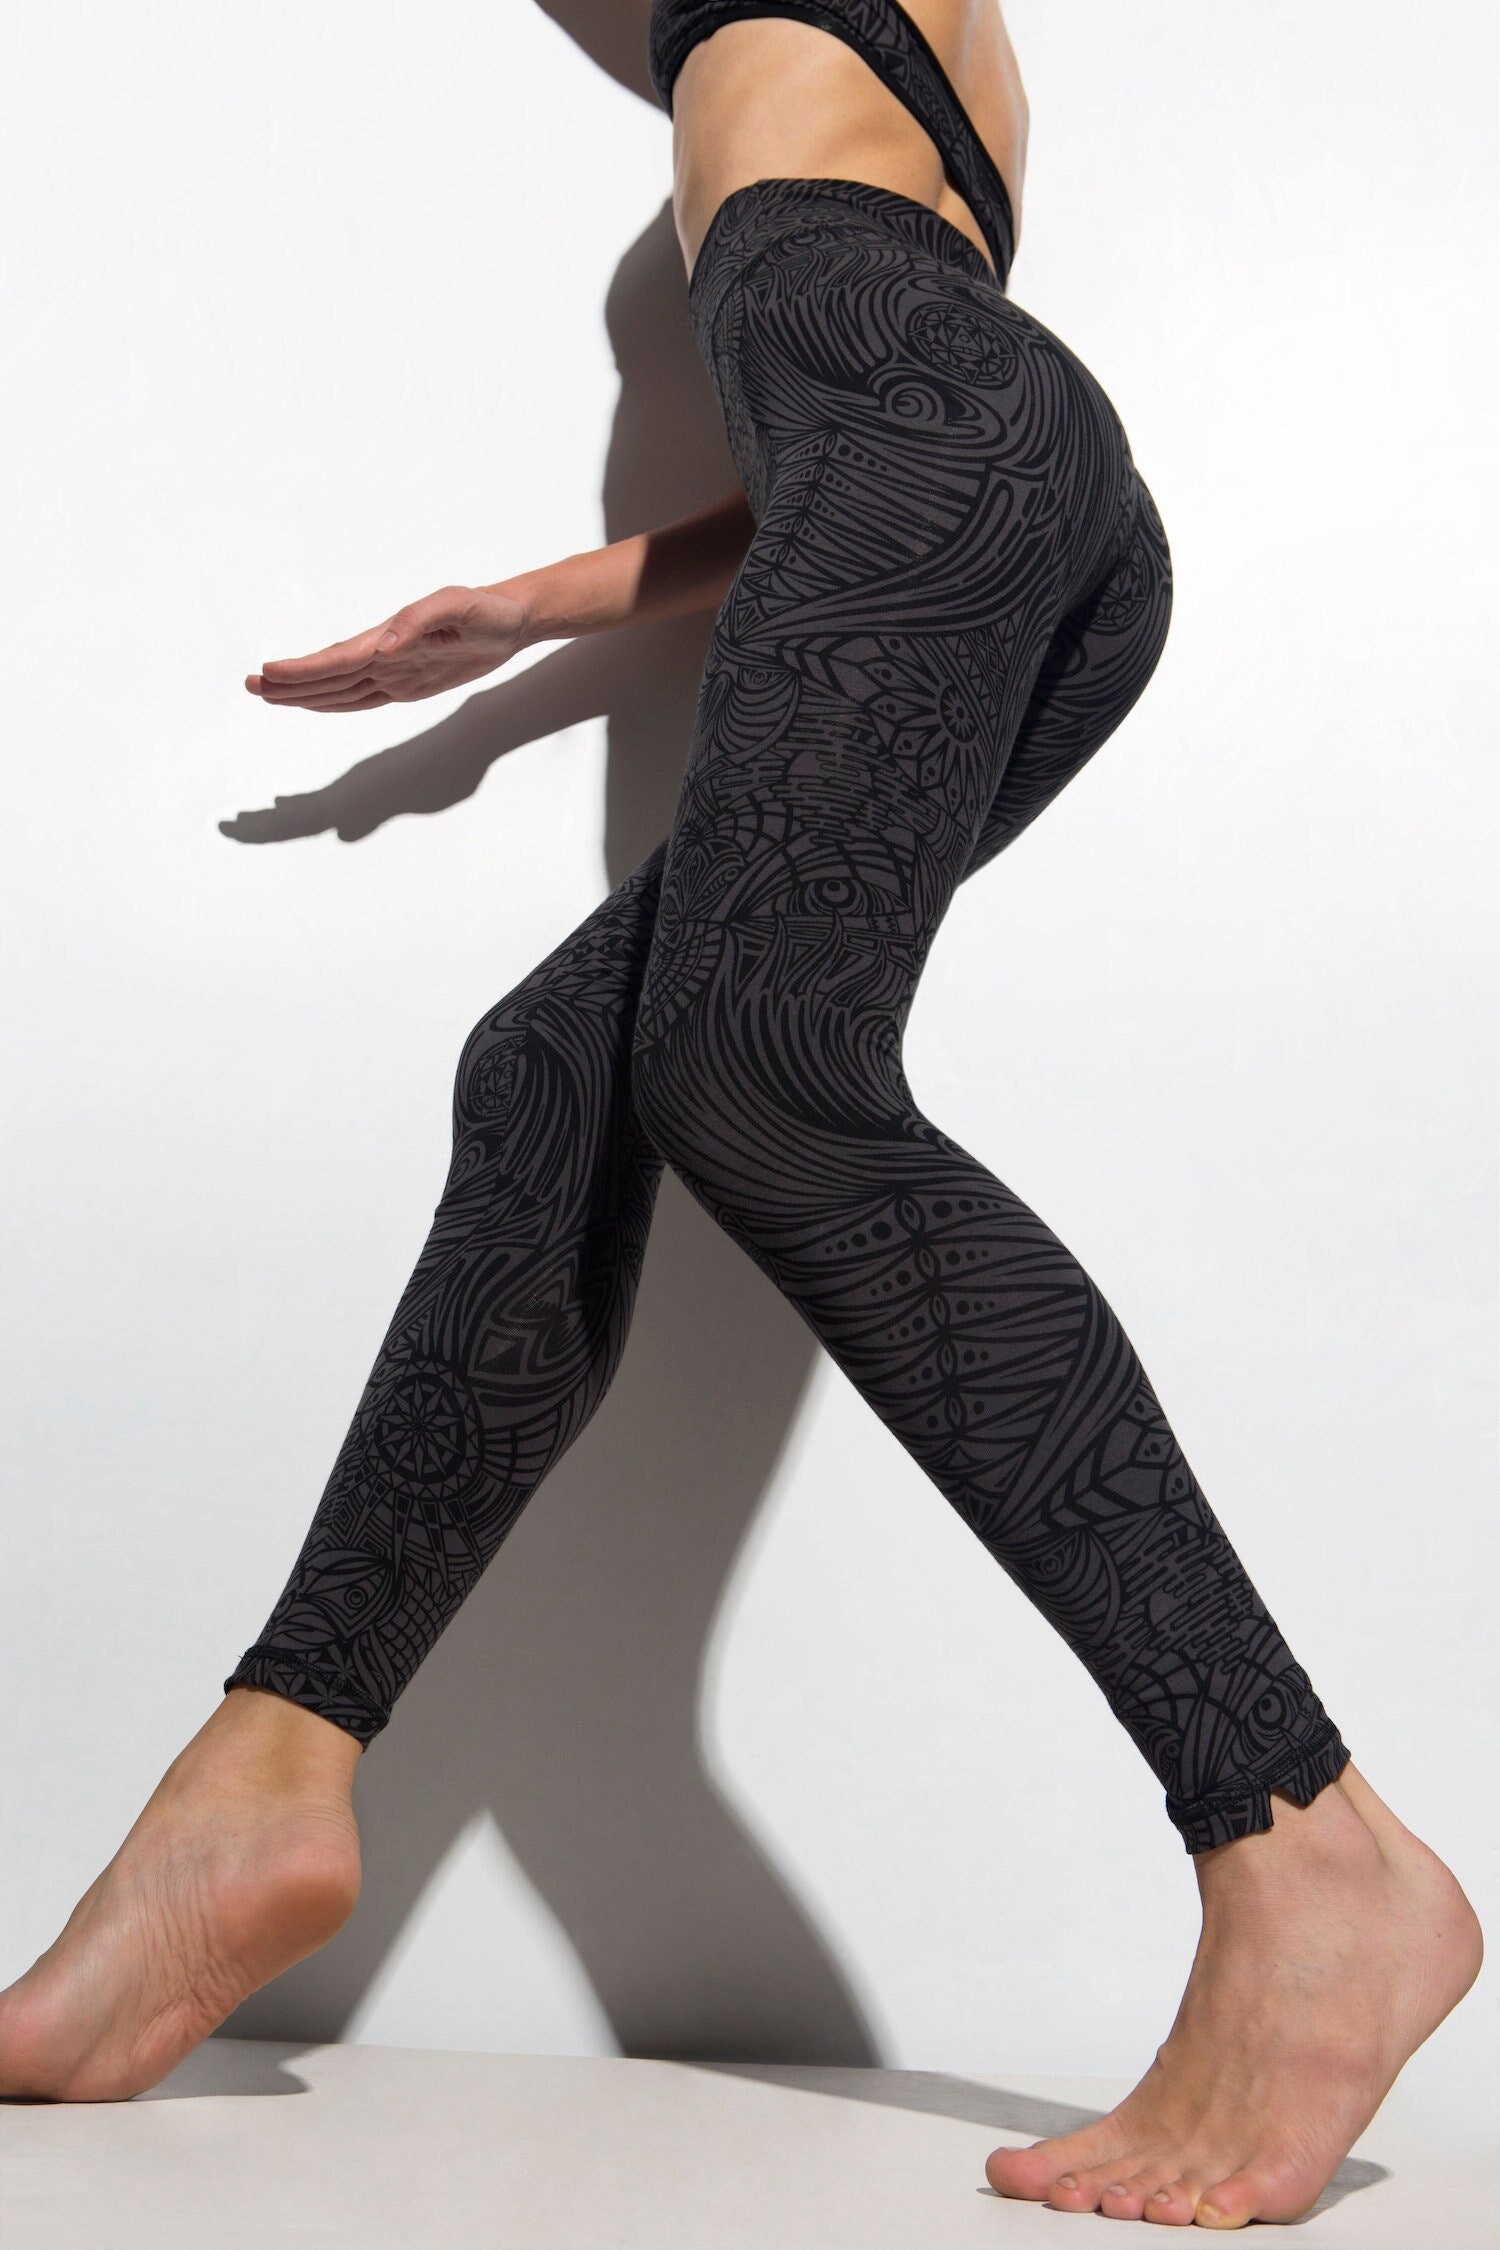 TRIBAL EAGLE LEGGINGS - Black  Grey - Yoga Tights - Tribal design